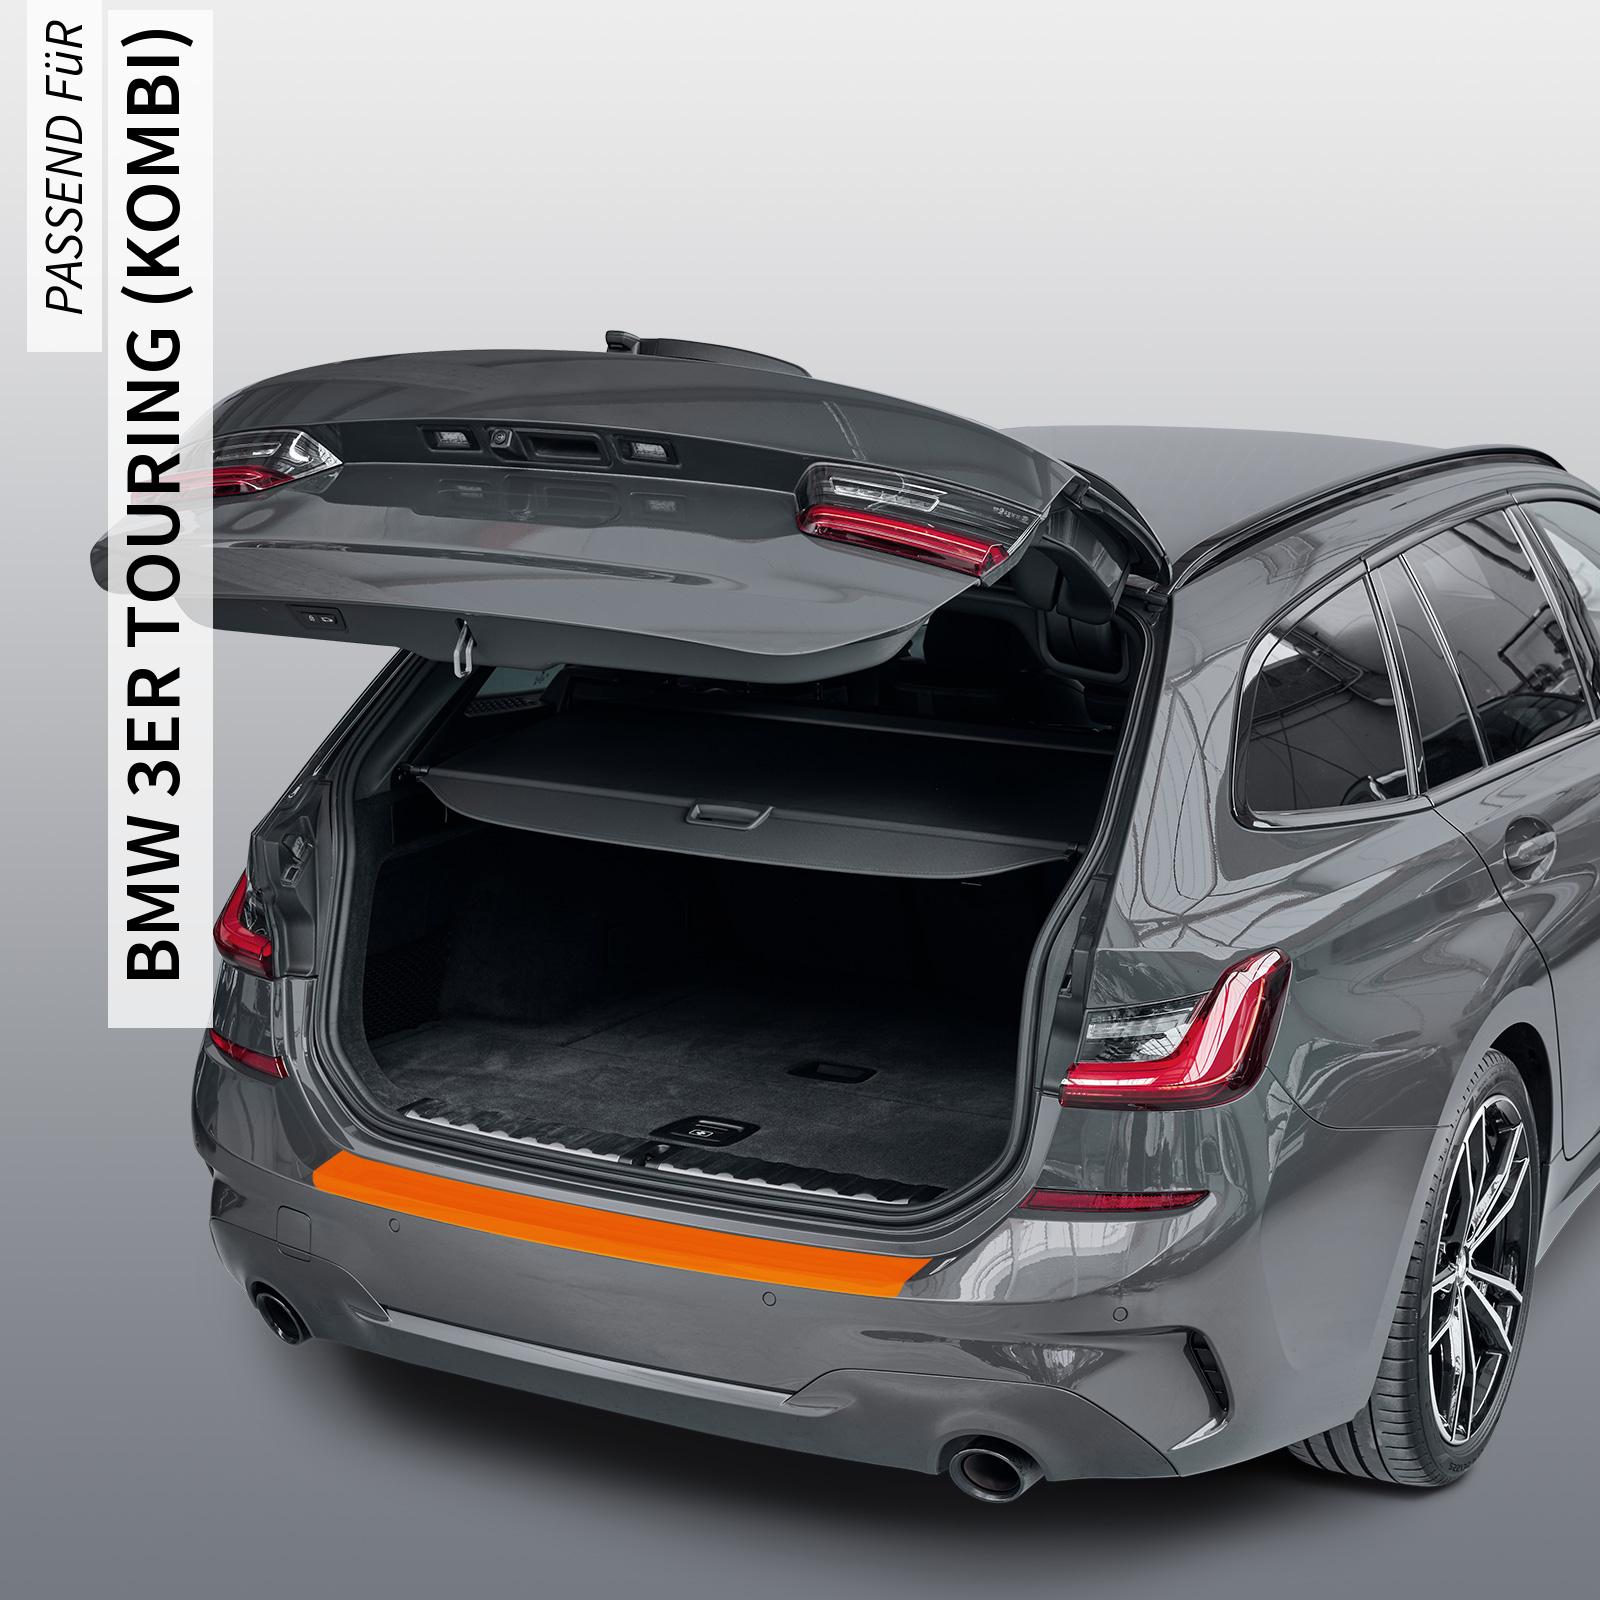 Ladekantenschutzfolie - Transparent Glatt Hochglänzend 150 µm stark für BMW 3er Touring (Kombi) Typ F31, Facelift, BJ 05/2015-08/2019